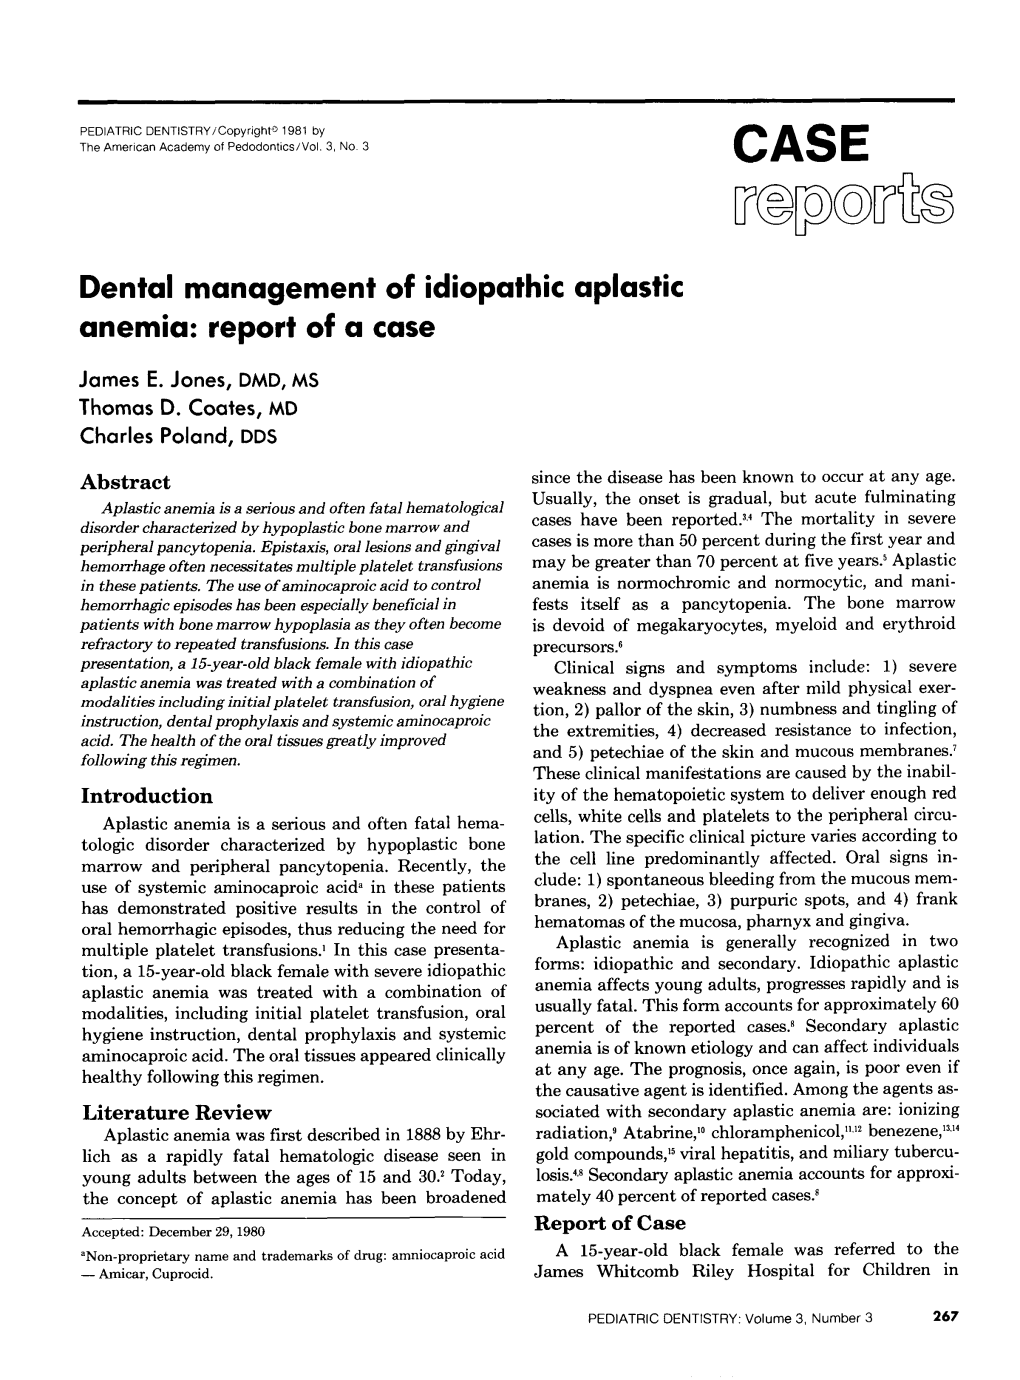 Dental Management of Idiopathic Aplastic Anemia